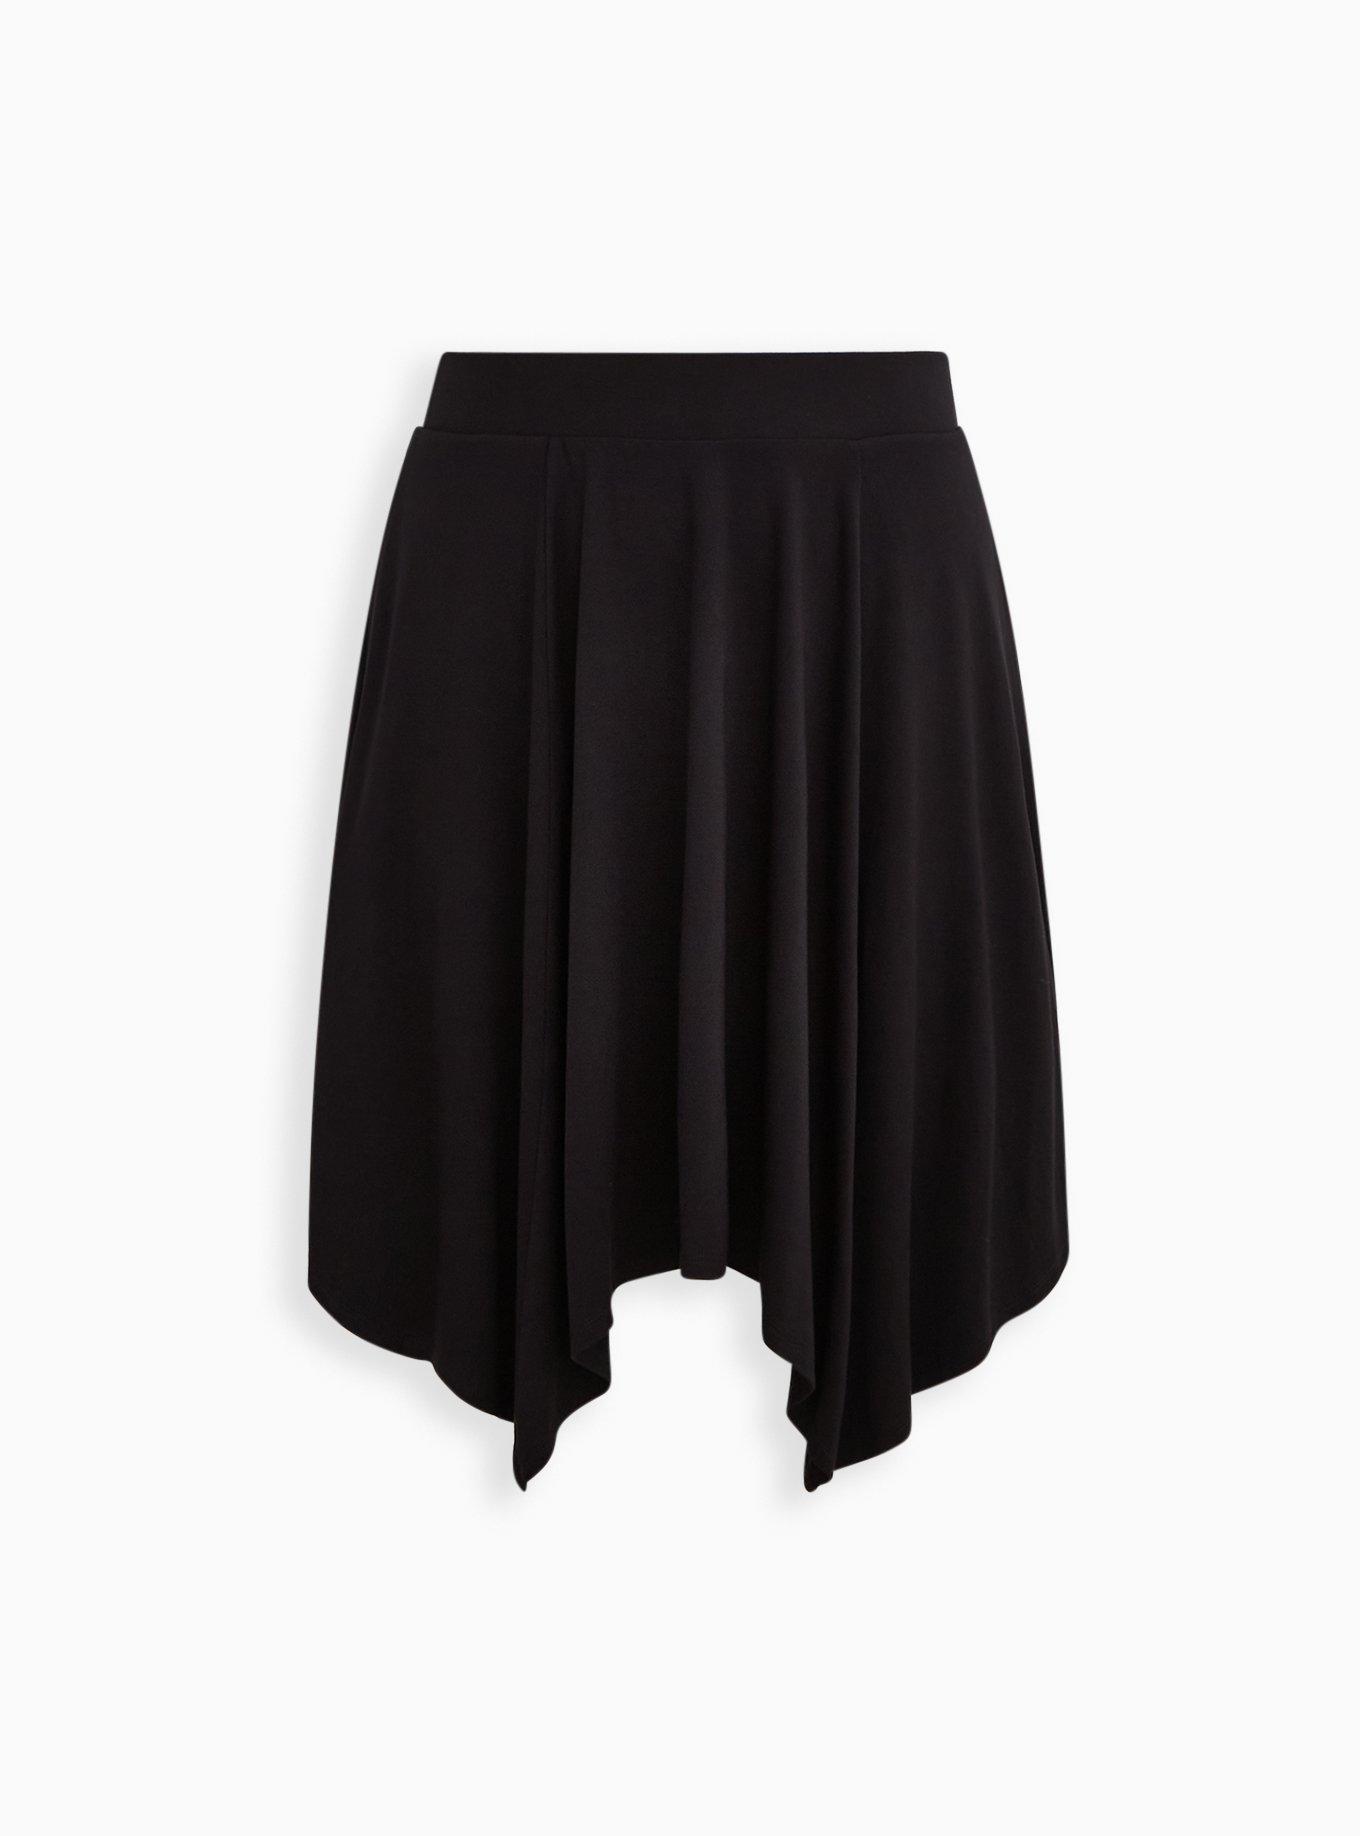 Plus Size - Handerchief Mini Skirt - Super Soft Black - Torrid